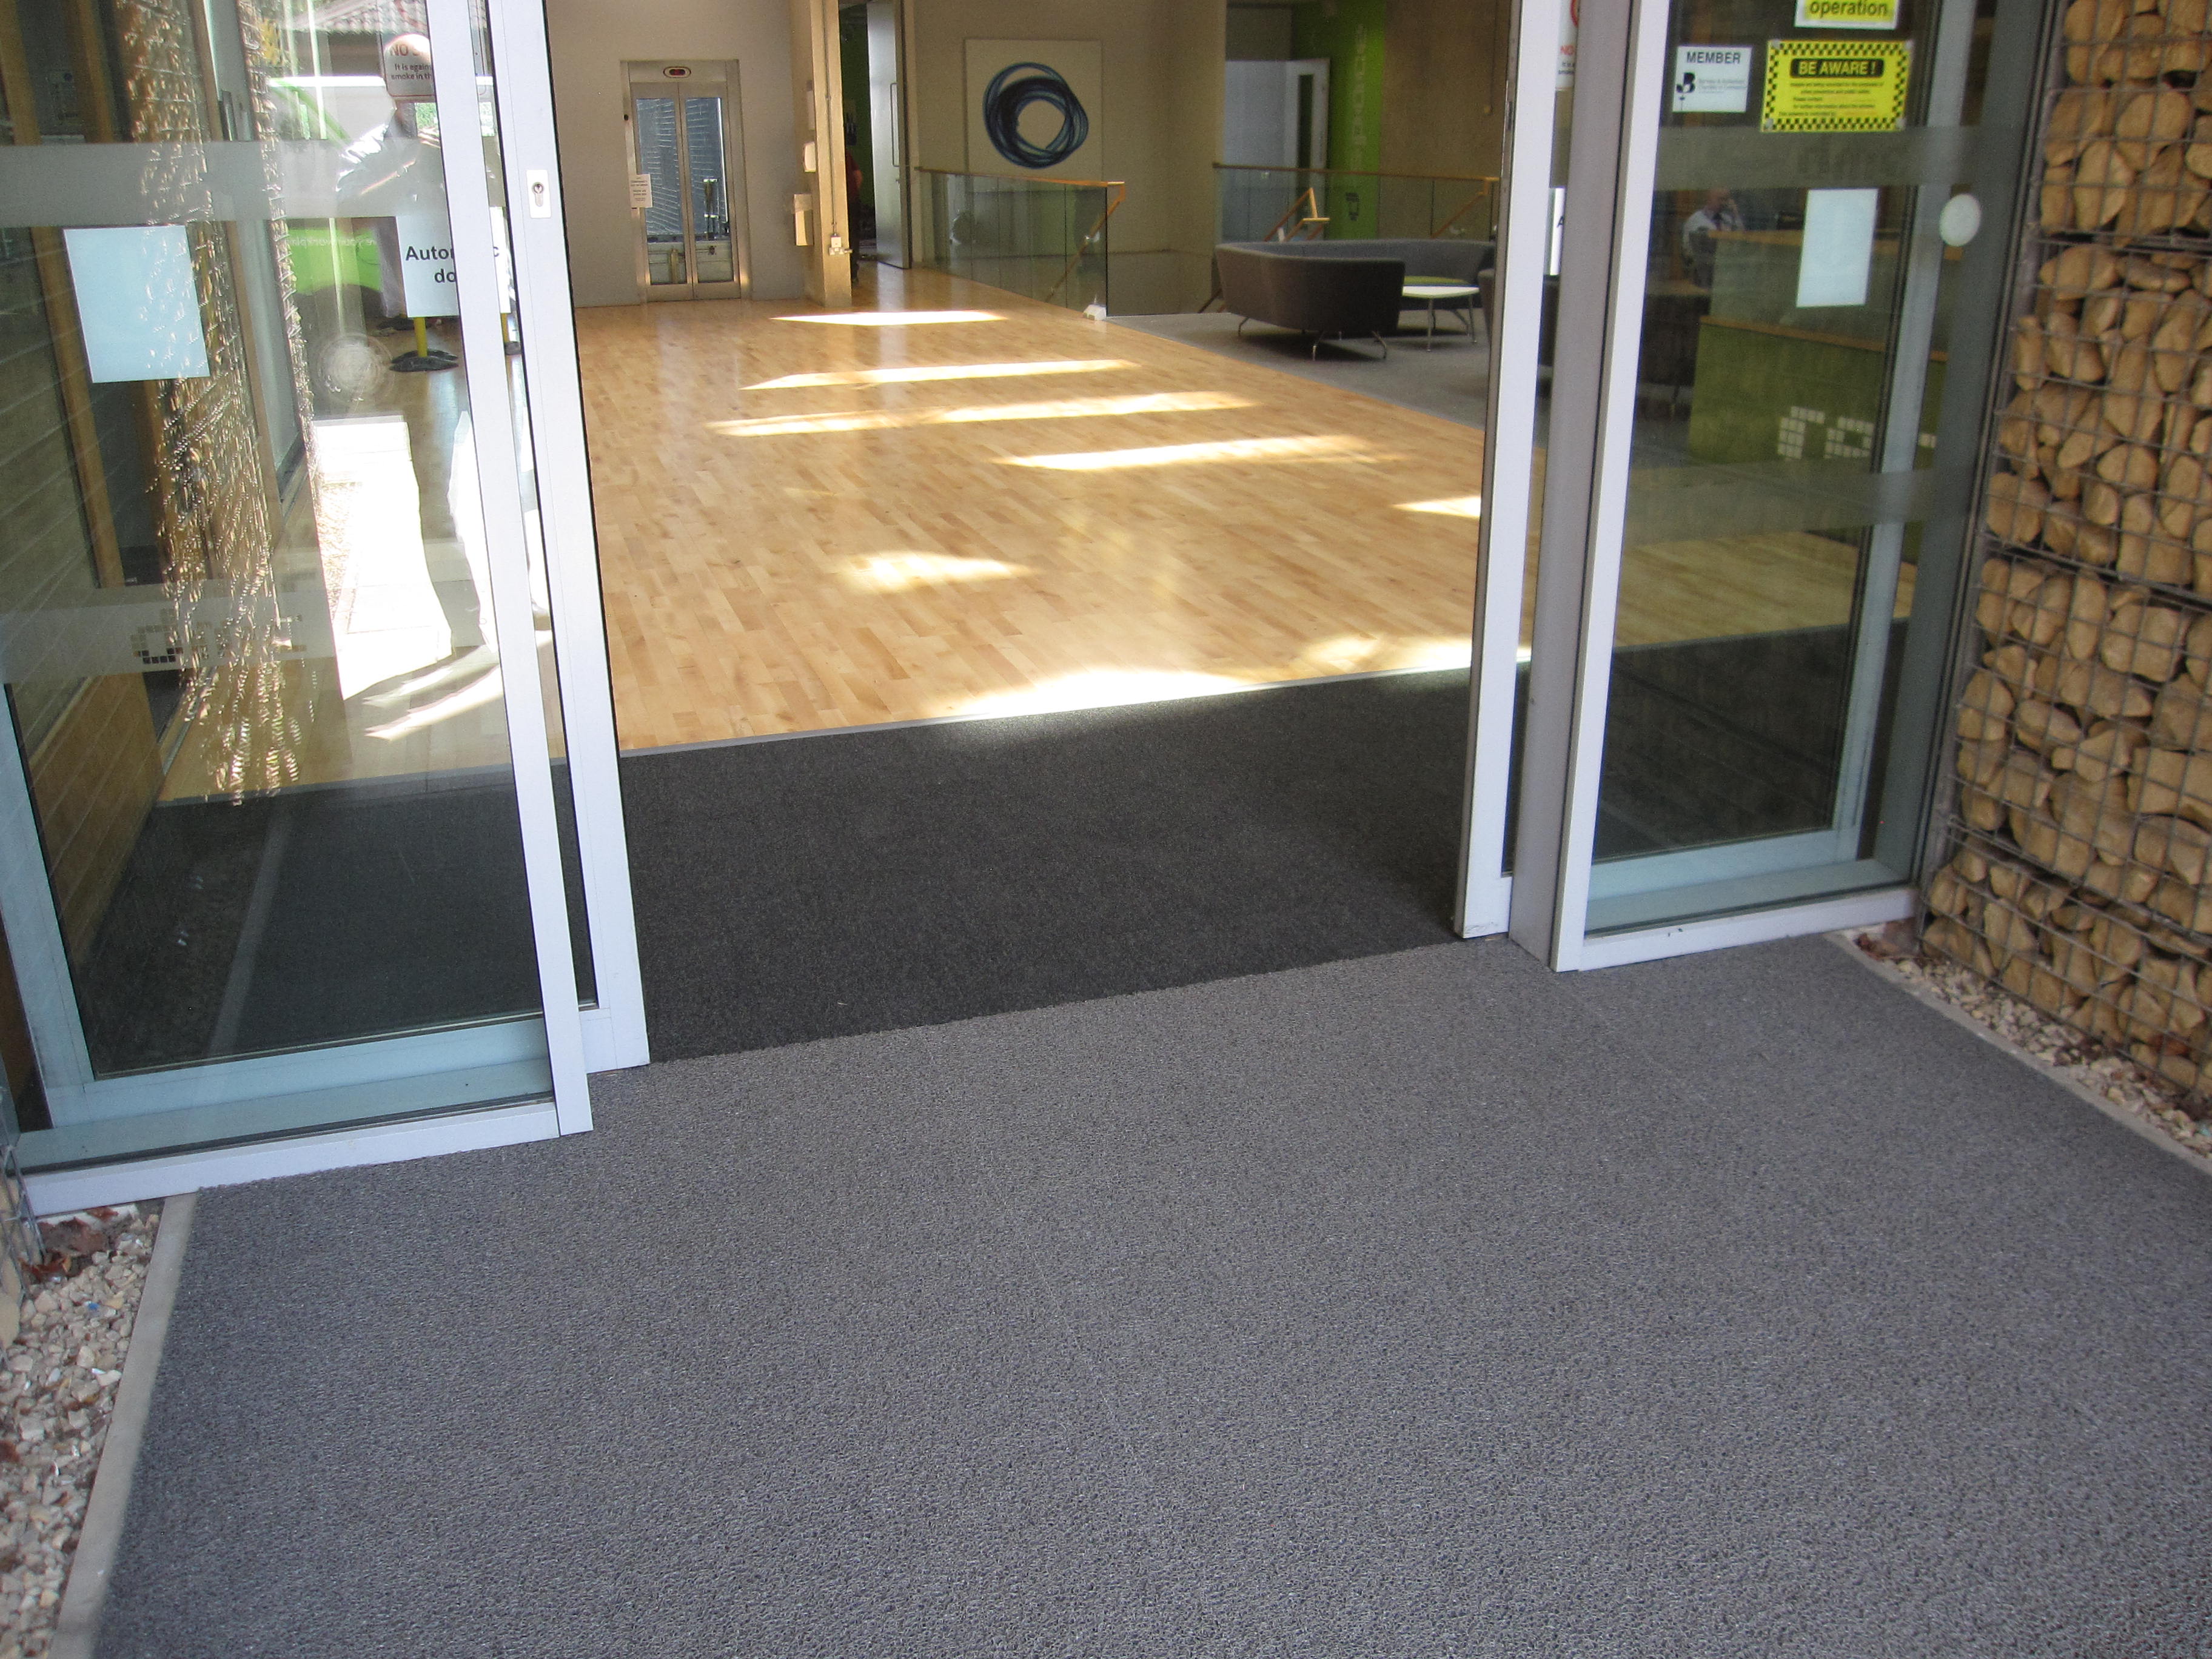 A Cumberlidge install new flooring at the Digital Media Centre in Barnsley